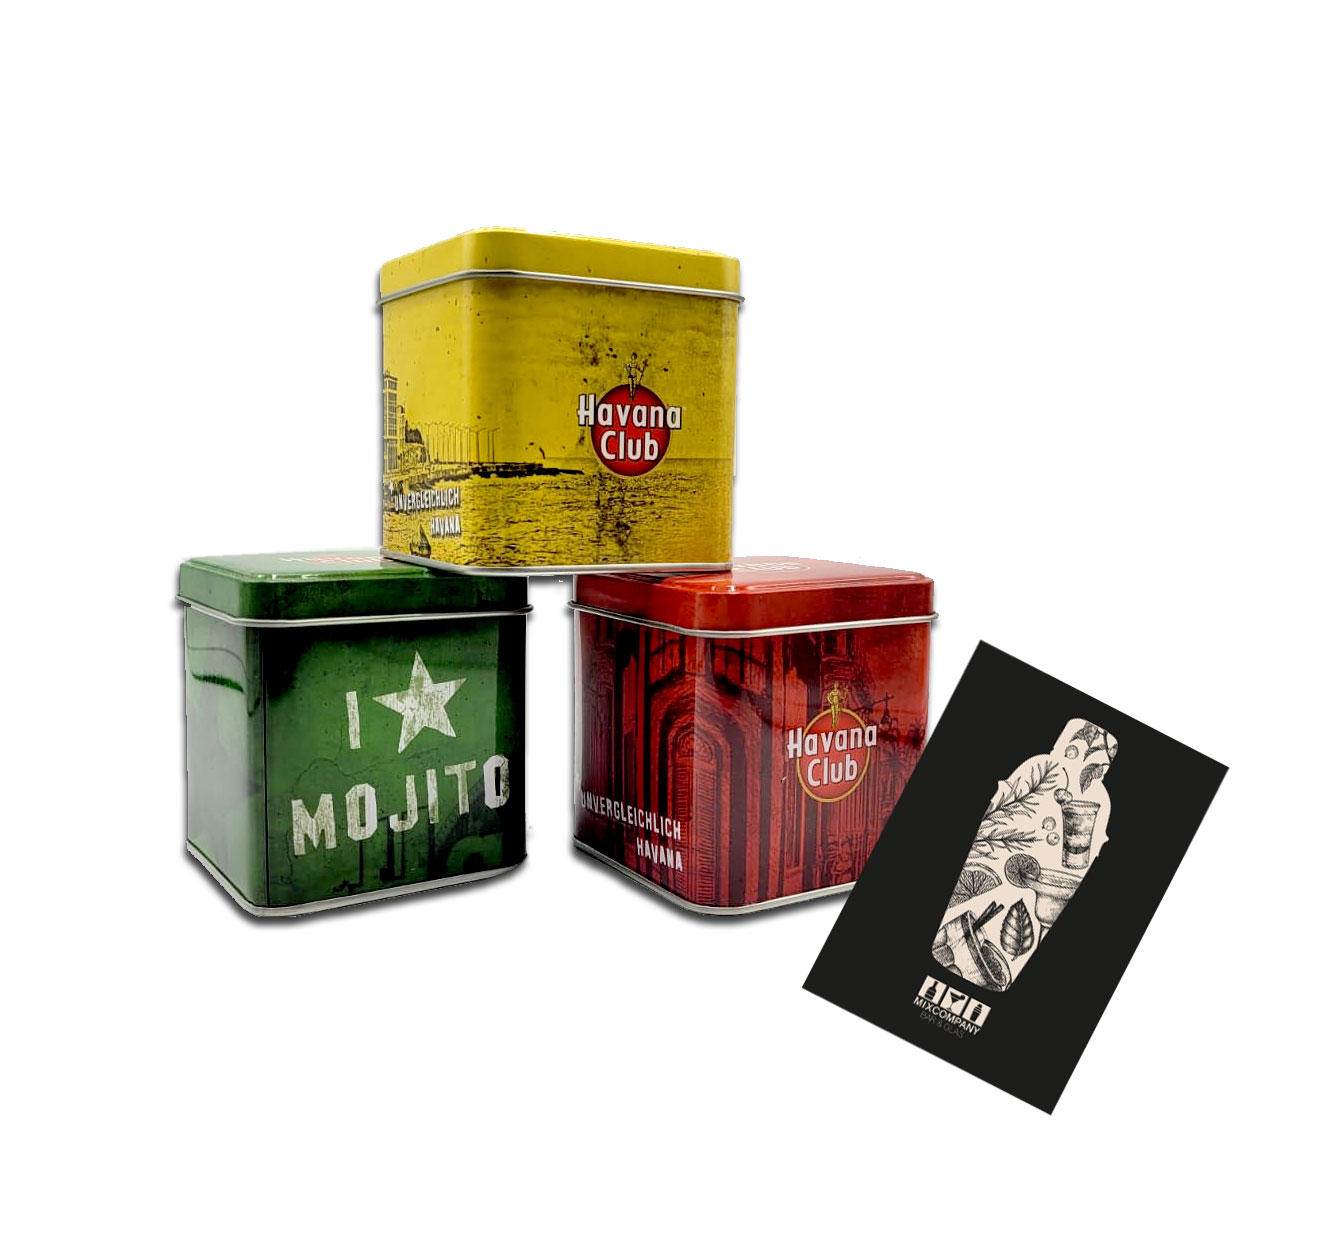 Havana Club Rum Dose 3er Set Becher Glas Tasse Blechdose gelb grün rot Metall Box Zucker Behälter